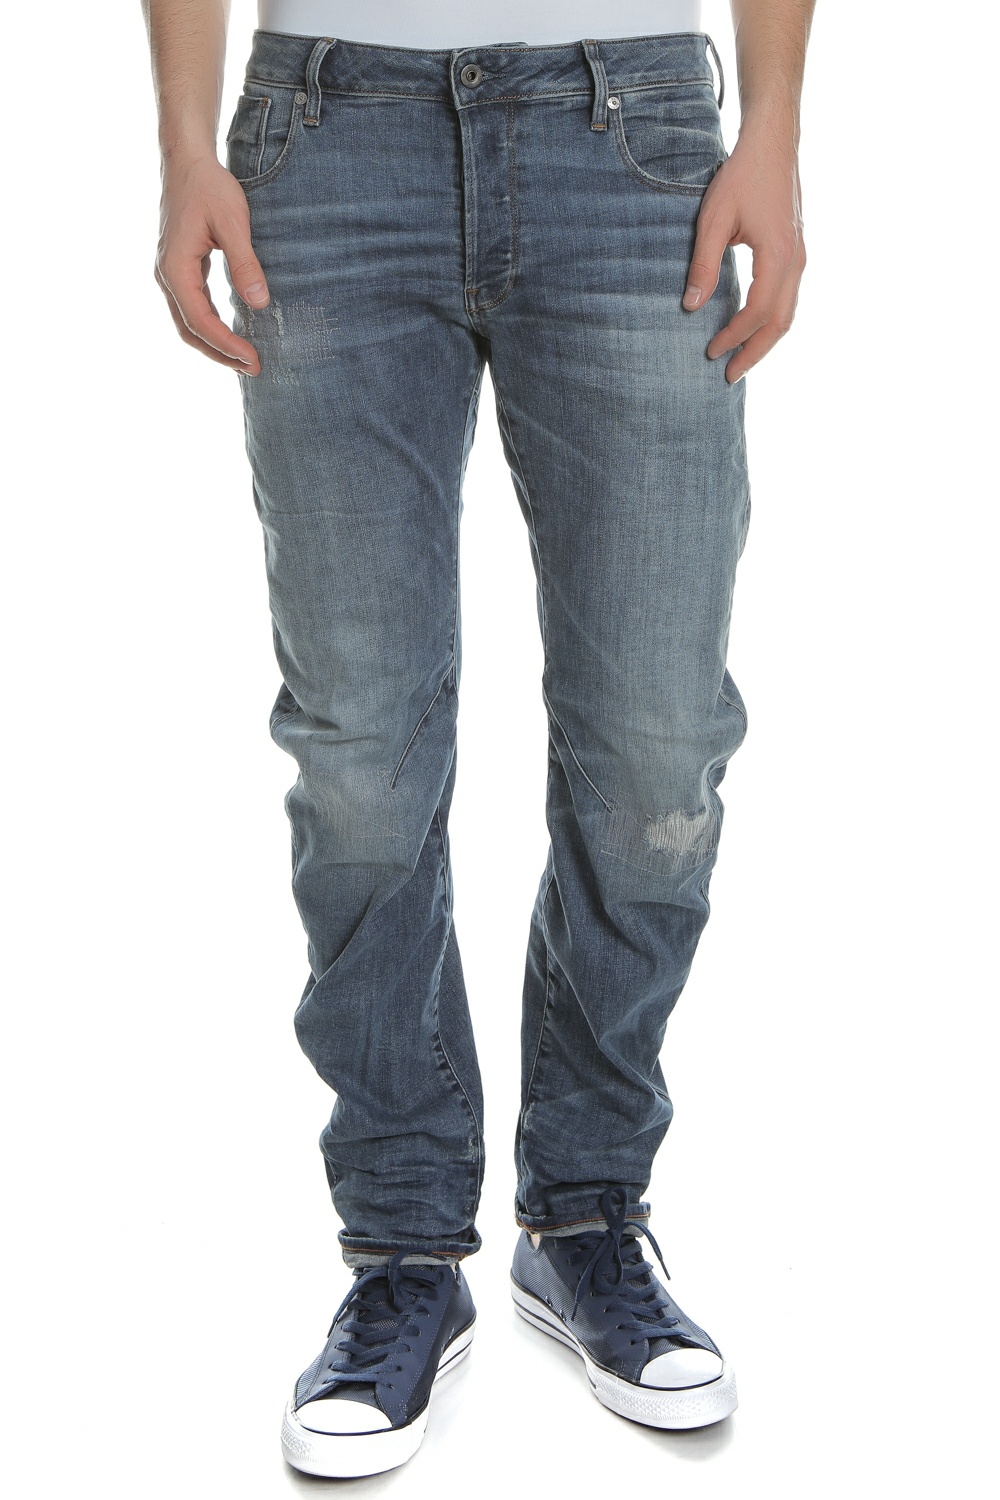 G-STAR RAW - Ανδρικό τζιν παντελόνι ARC 3D SLIM G-STAR RAW μπλε Ανδρικά/Ρούχα/Τζίν/Skinny